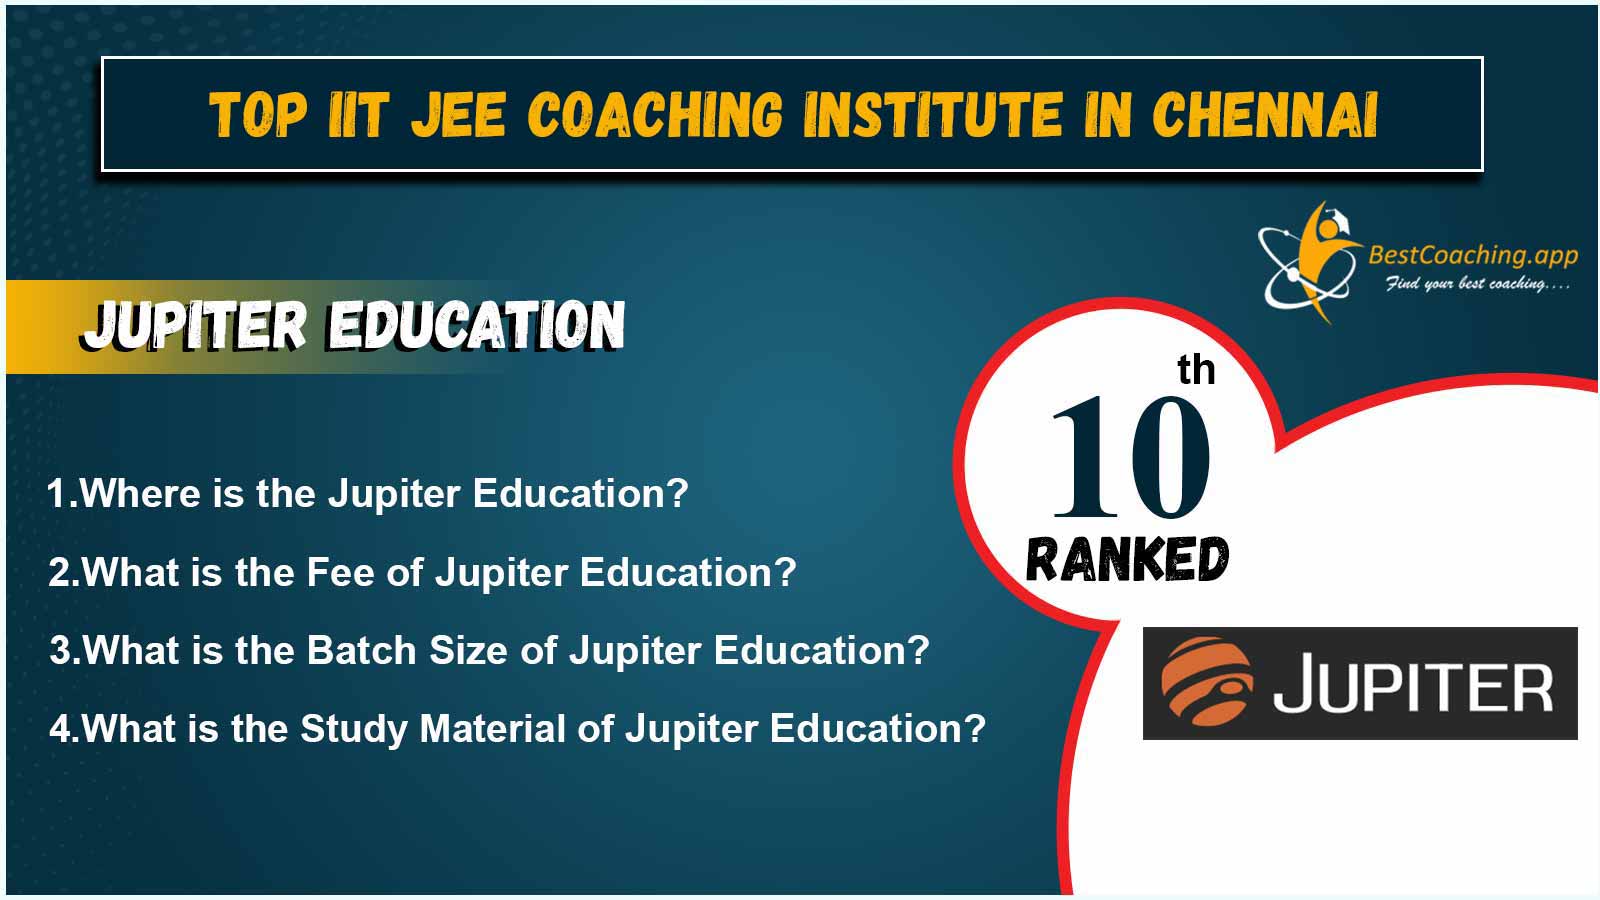 Best IIT JEE Coaching of Chennai